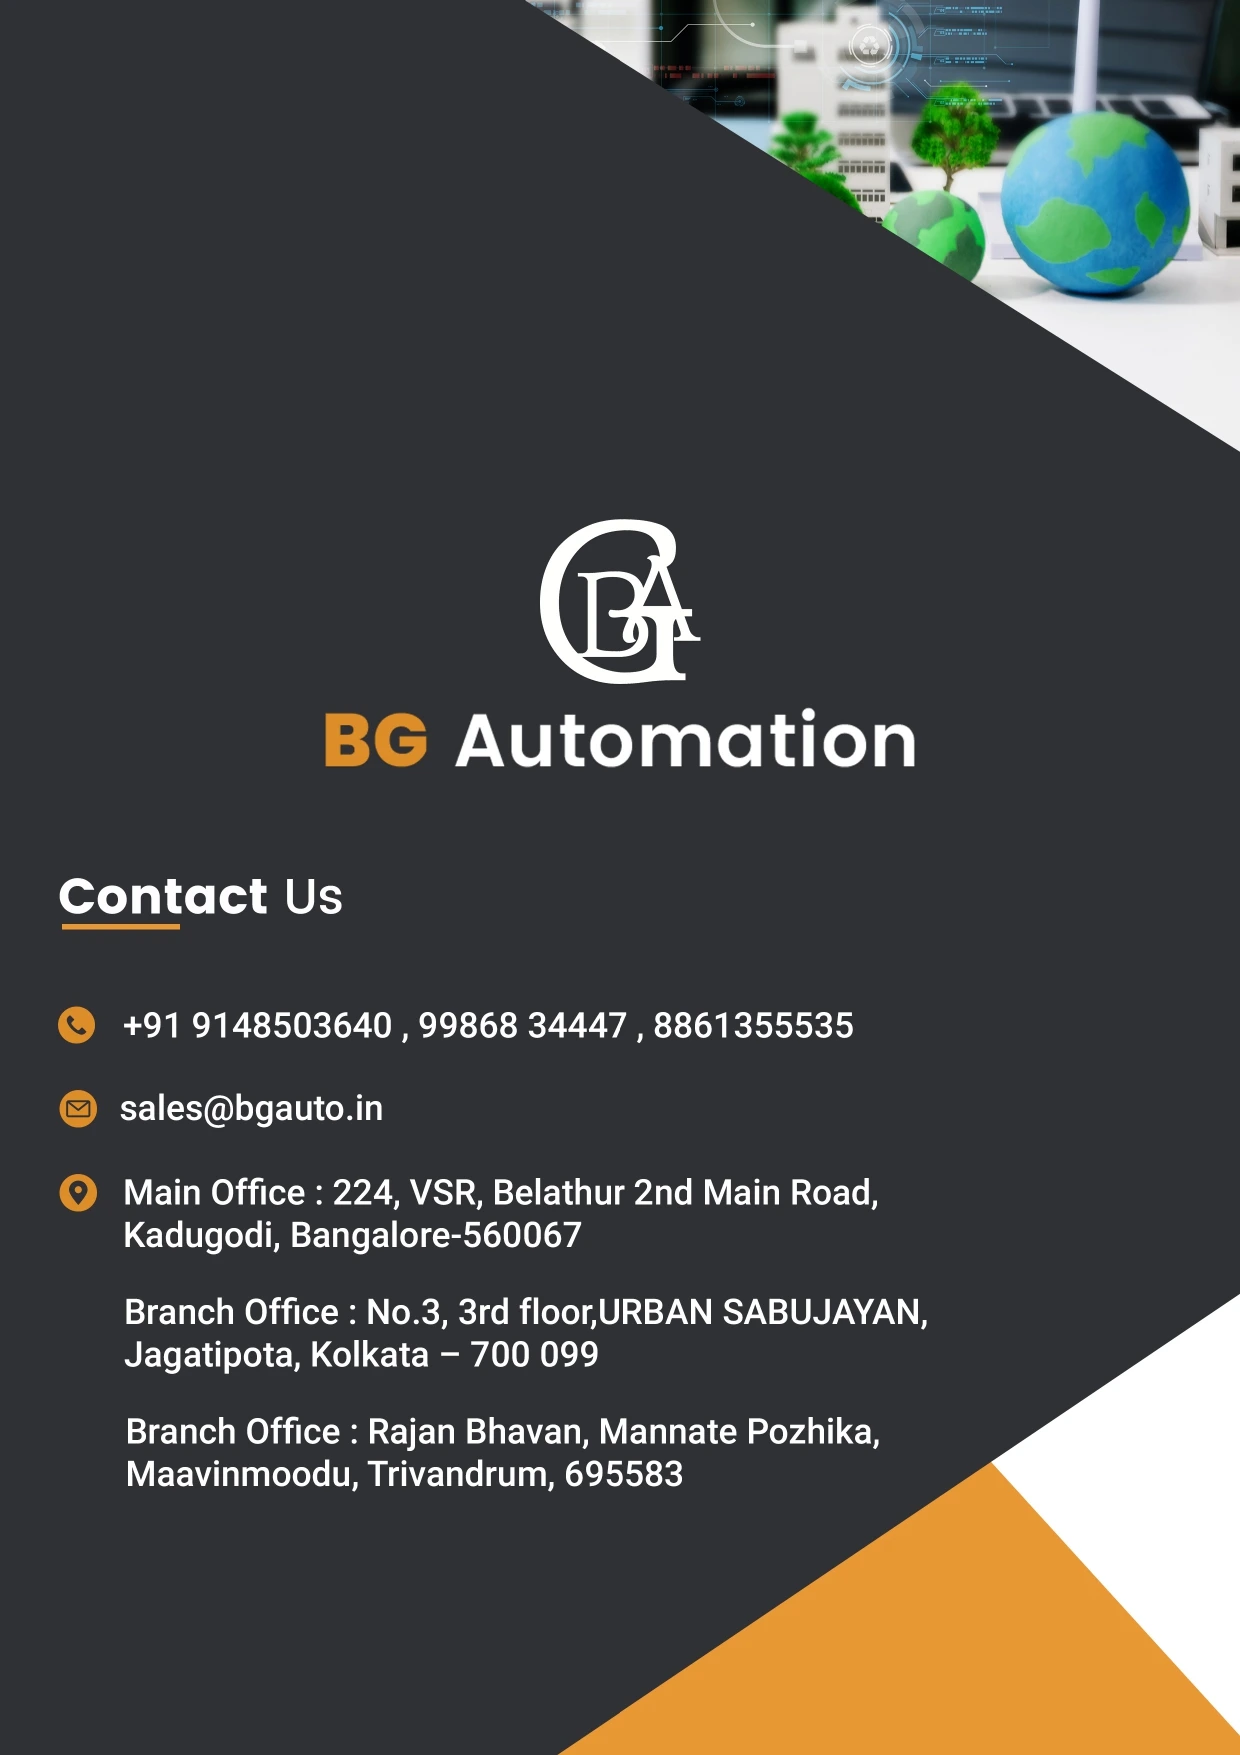 BG Automation Company Profile_page-0005